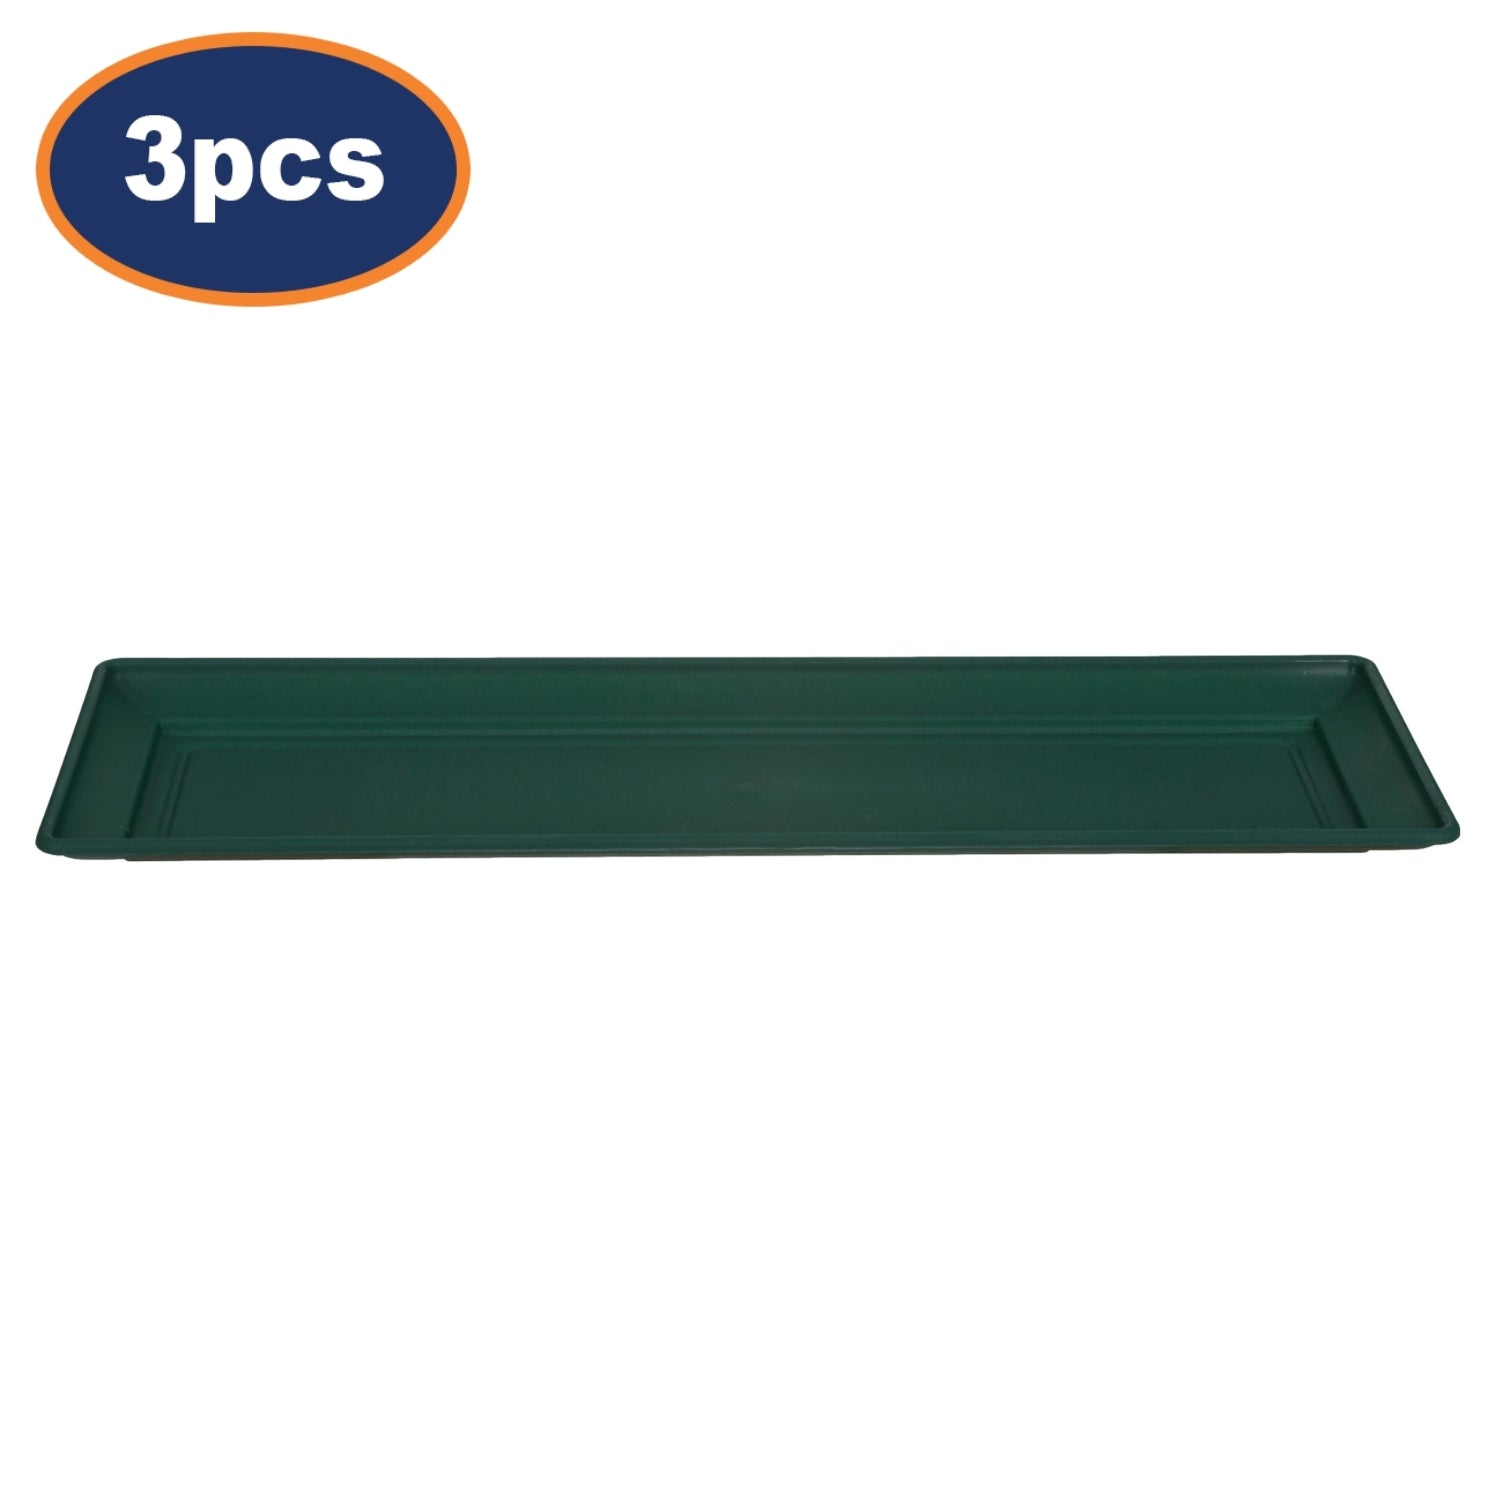 3pcs 57cm Green Planter Tray